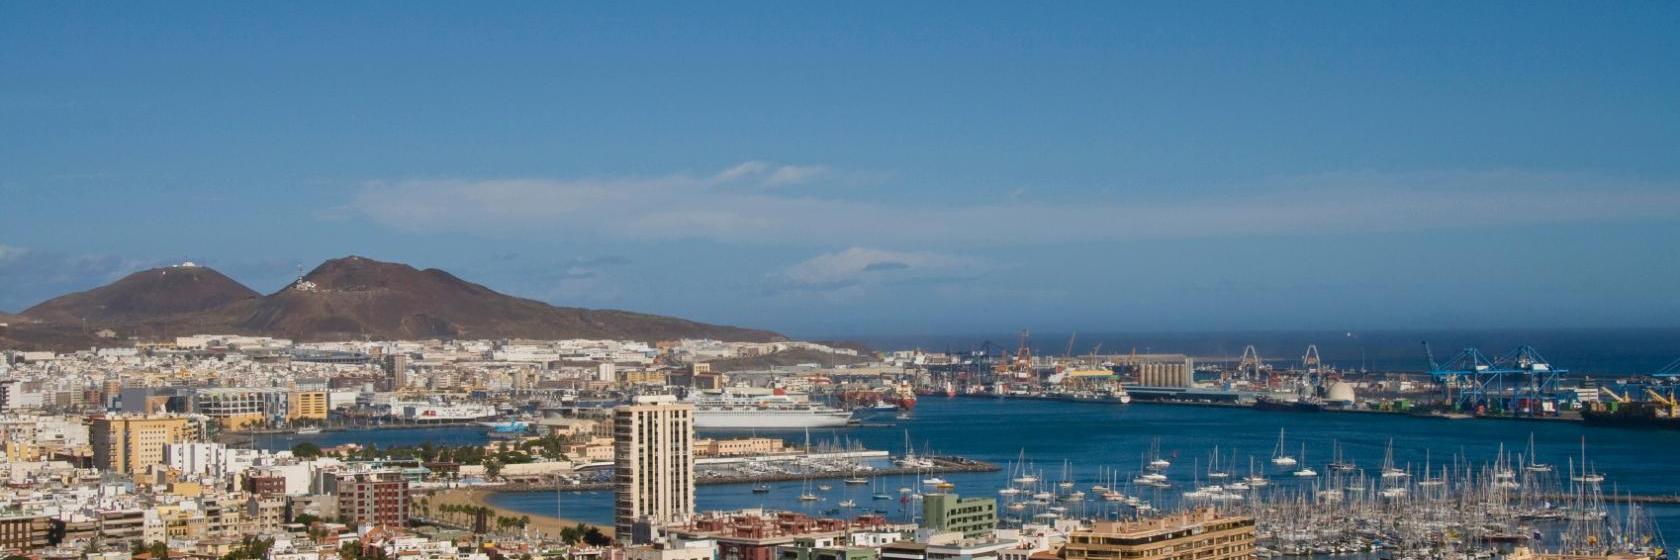 10 Best Las Palmas de Gran Canaria Hotels, Spain (From $37)